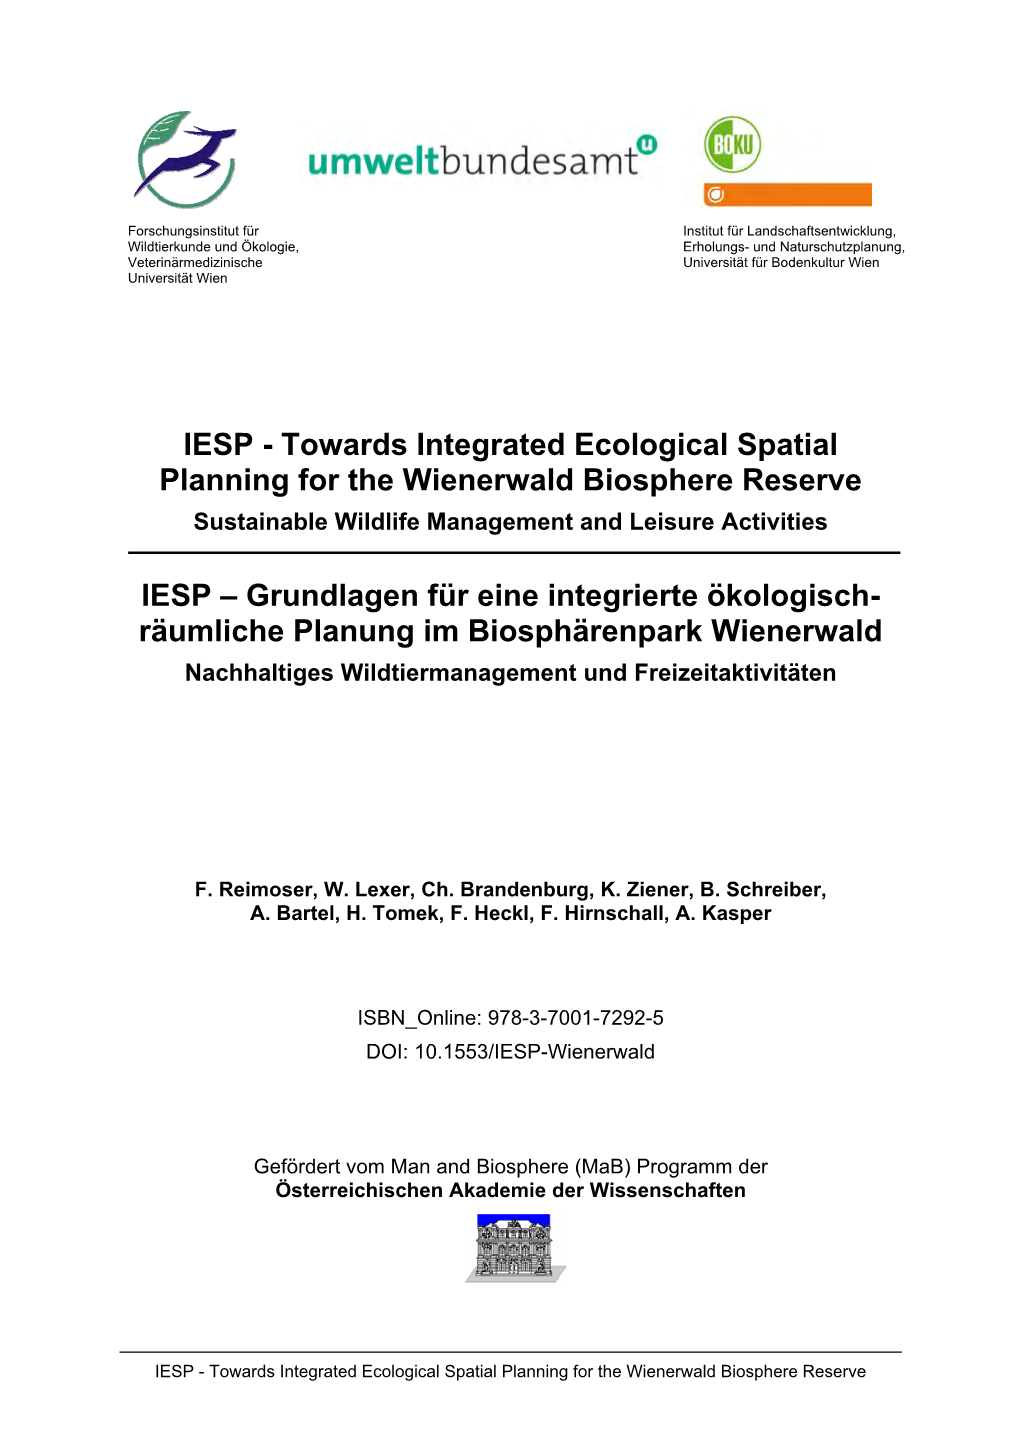 Towards Integrated Ecological Spatial Planning for the Wienerwald Biosphere Reserve IESP - Impressum